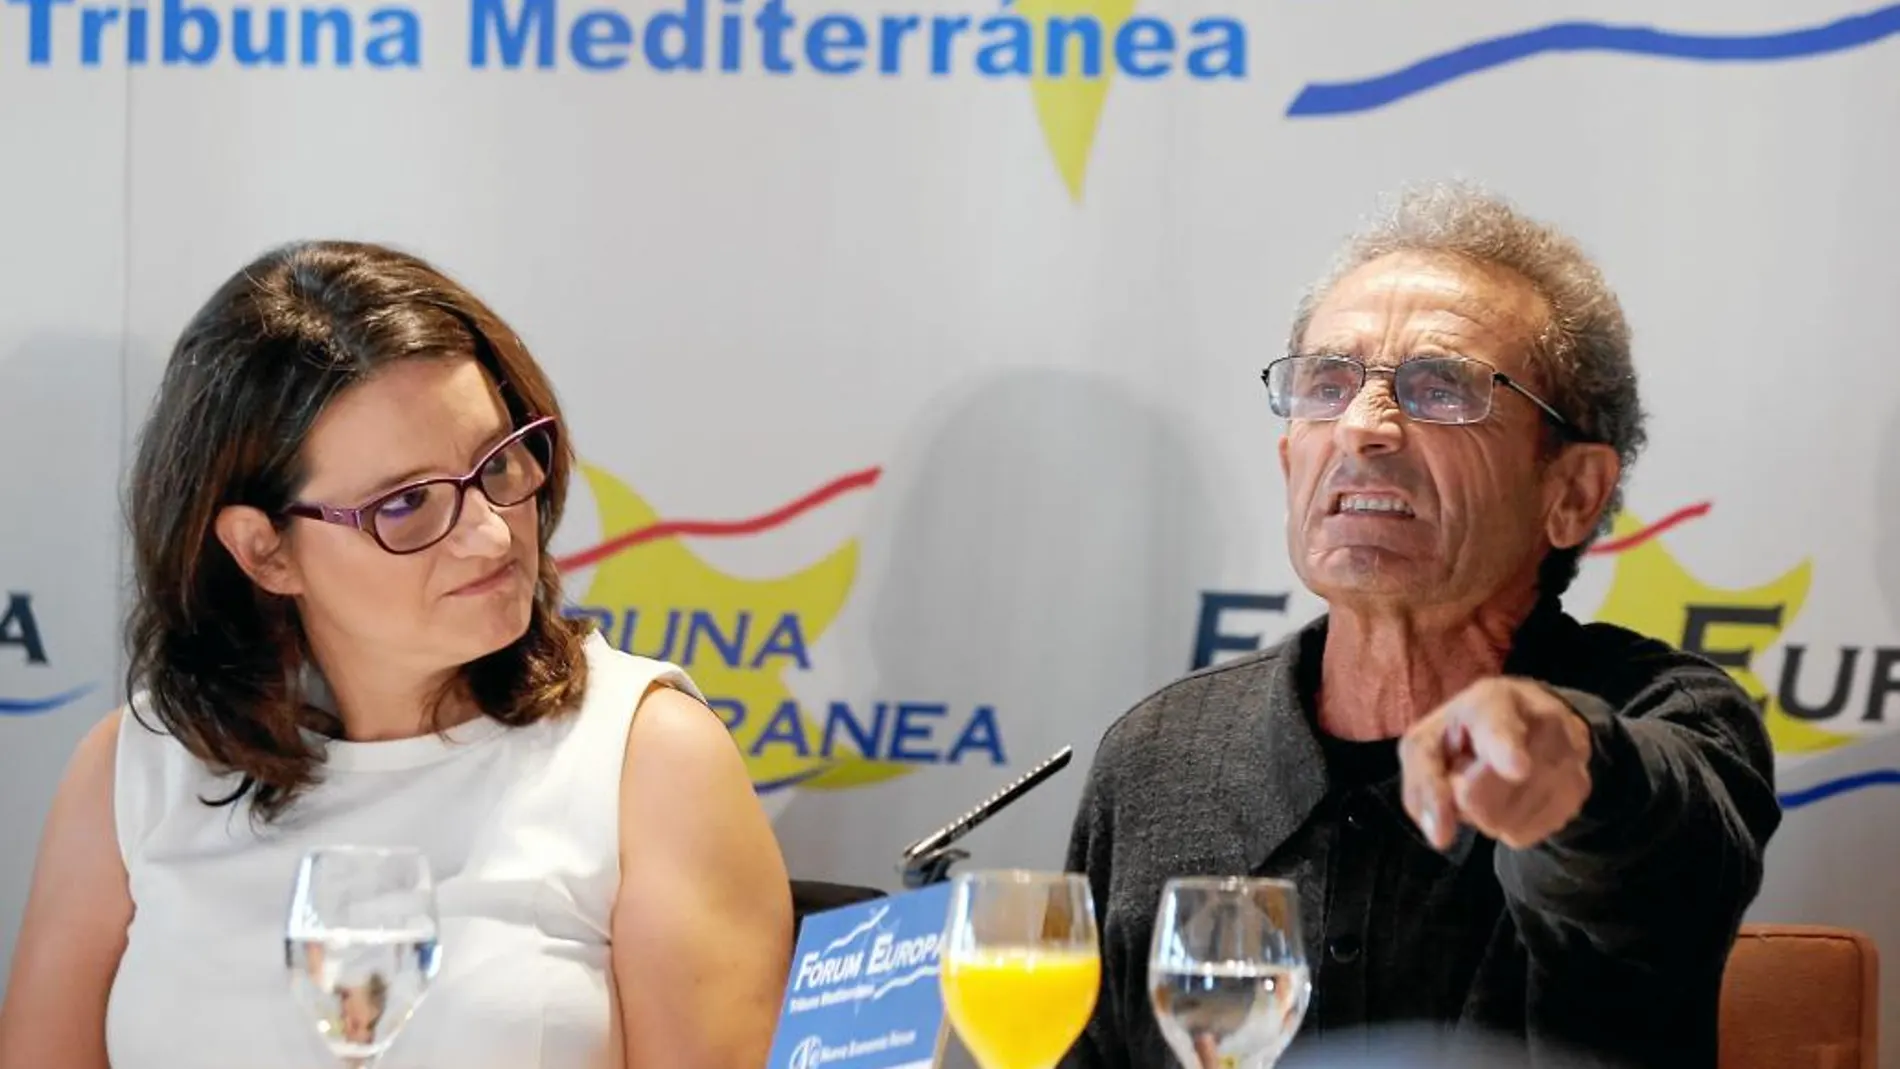 La vicepresidenta de la Generalitat valenciana, Mónica Oltra, junto al agricultor Vicent Martí